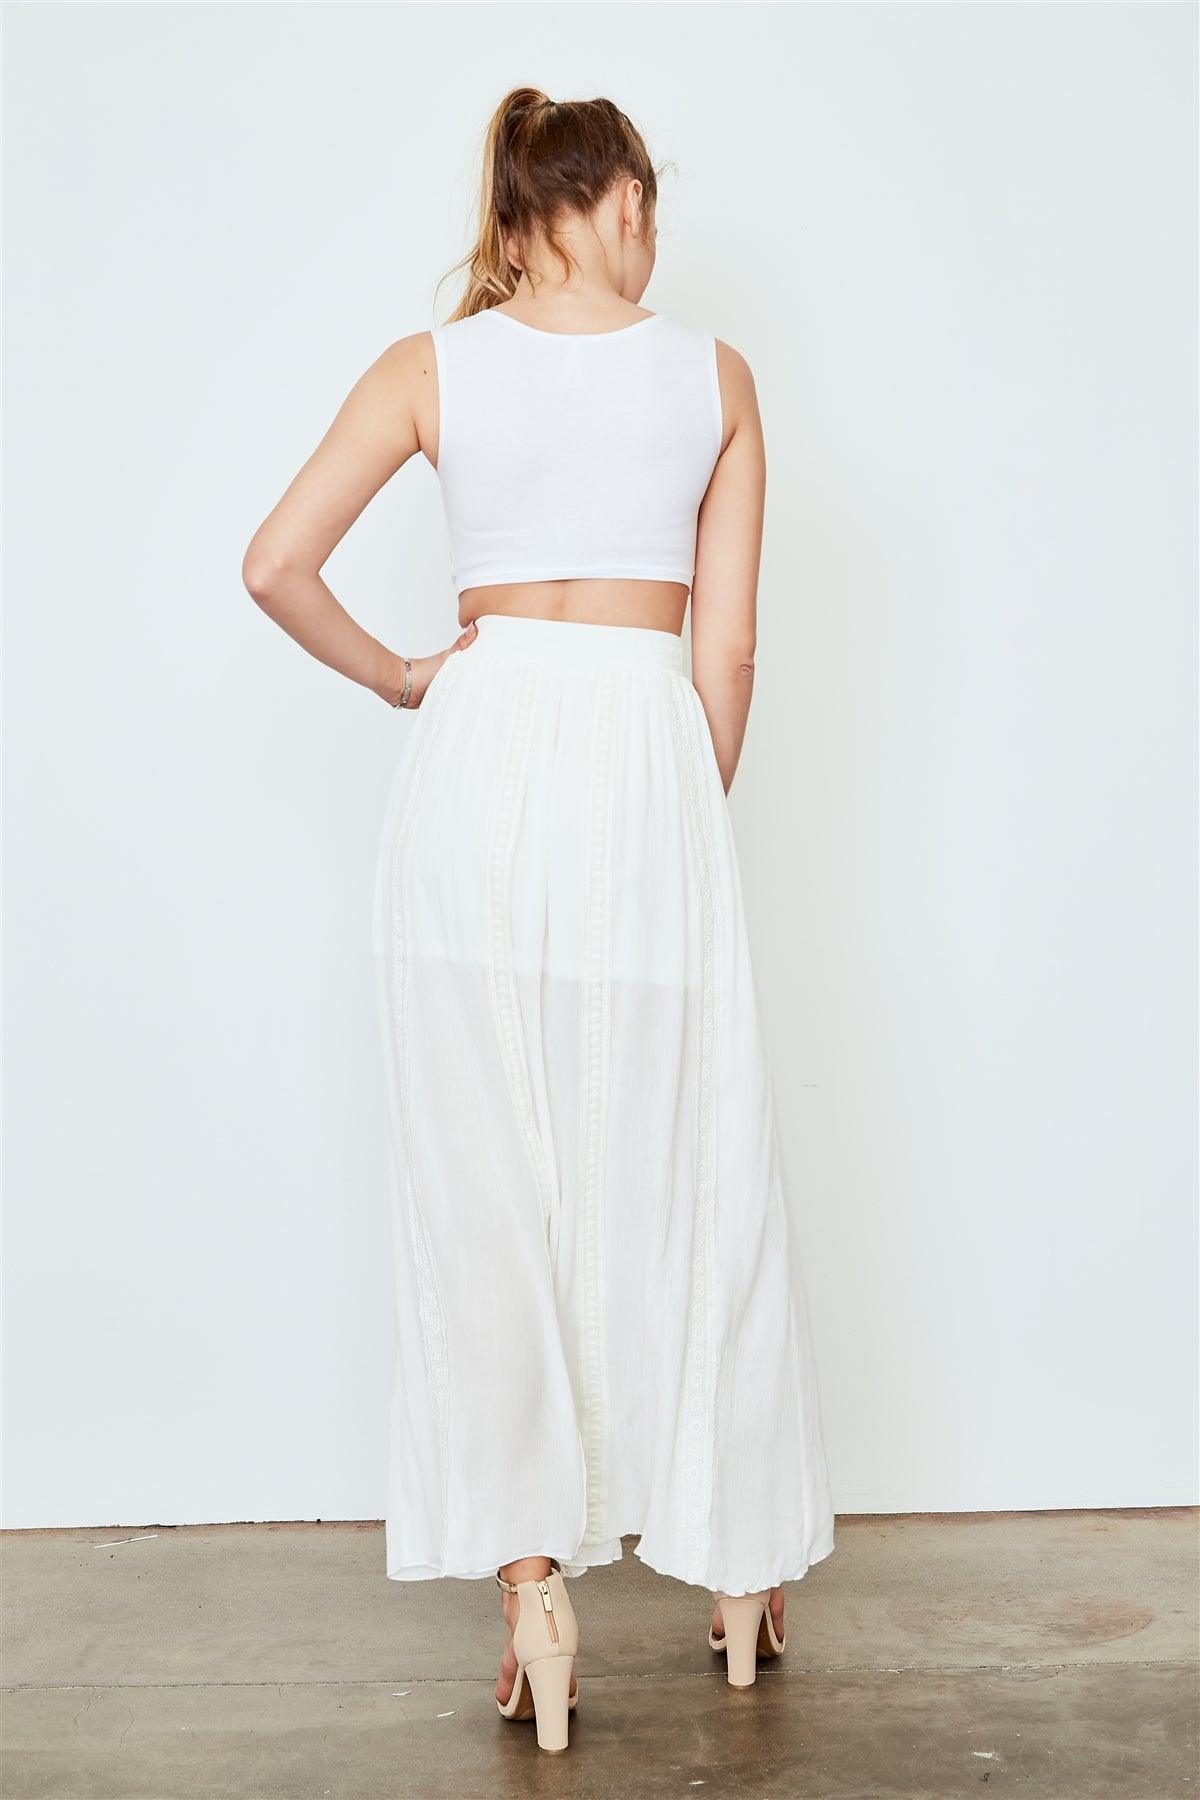 Off White Floral Lace Crochet Trim Maxi Skirt /2-3-2